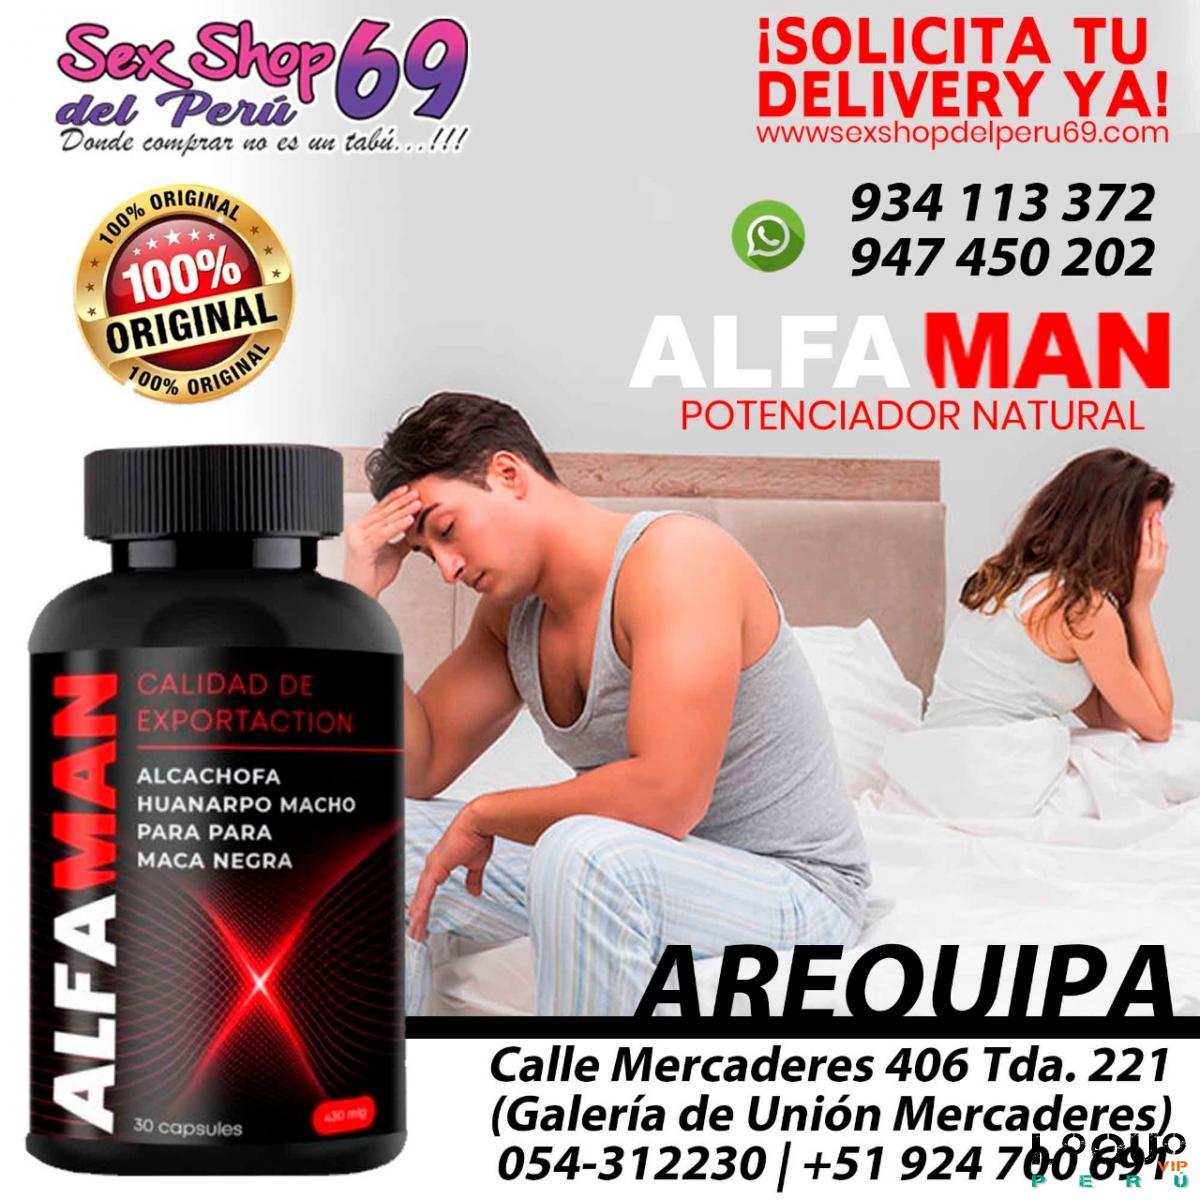 Sex Shop Arequipa: Desarrollador _ALFAMAN_100% Natural